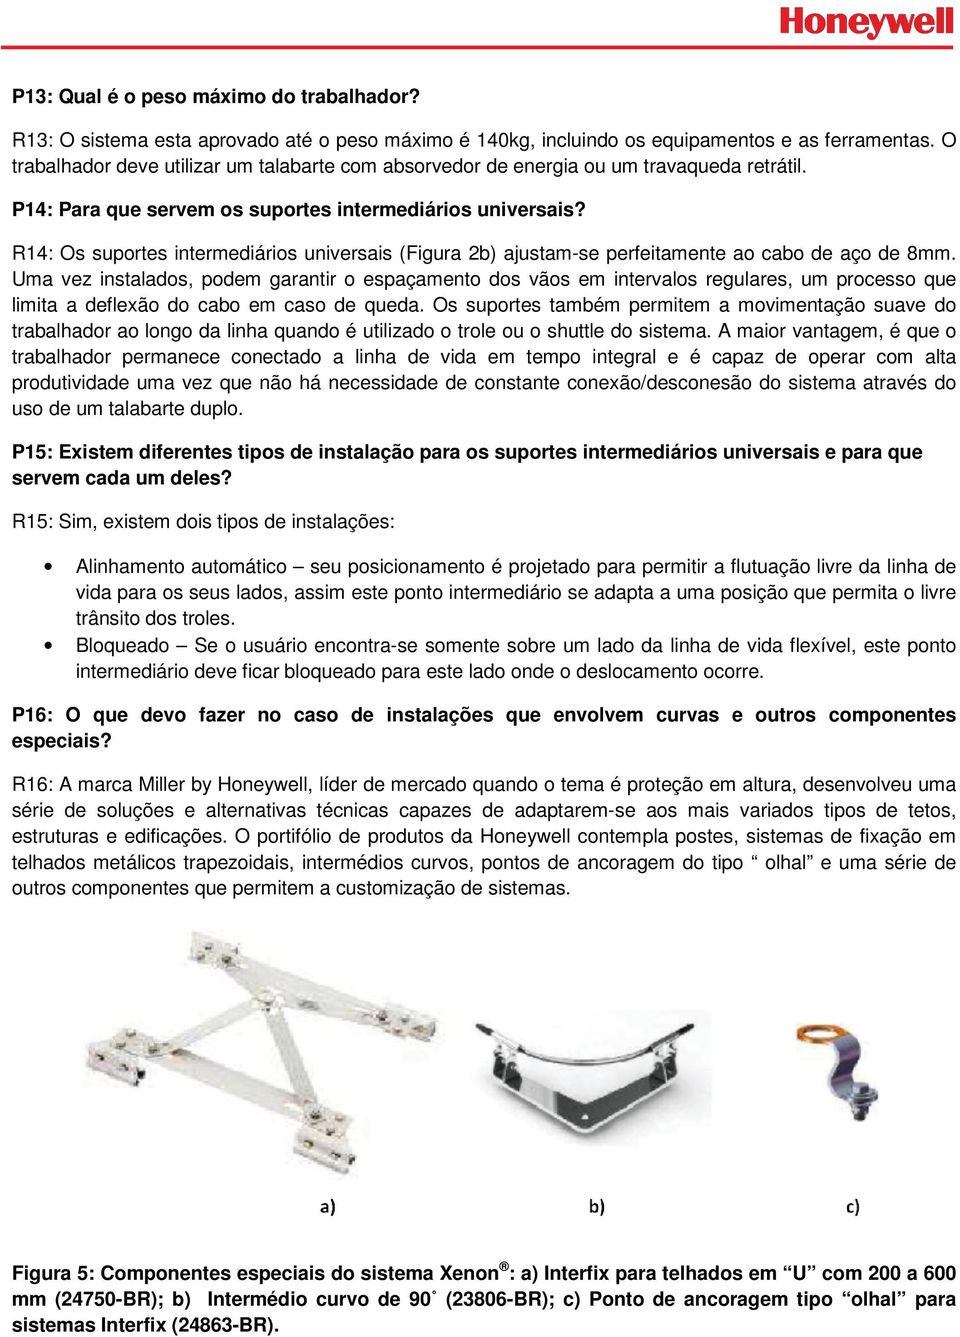 XENON SISTEMAS DE LINHA DE VIDA HORIZONTAL PERMANENTE - PDF Download grátis